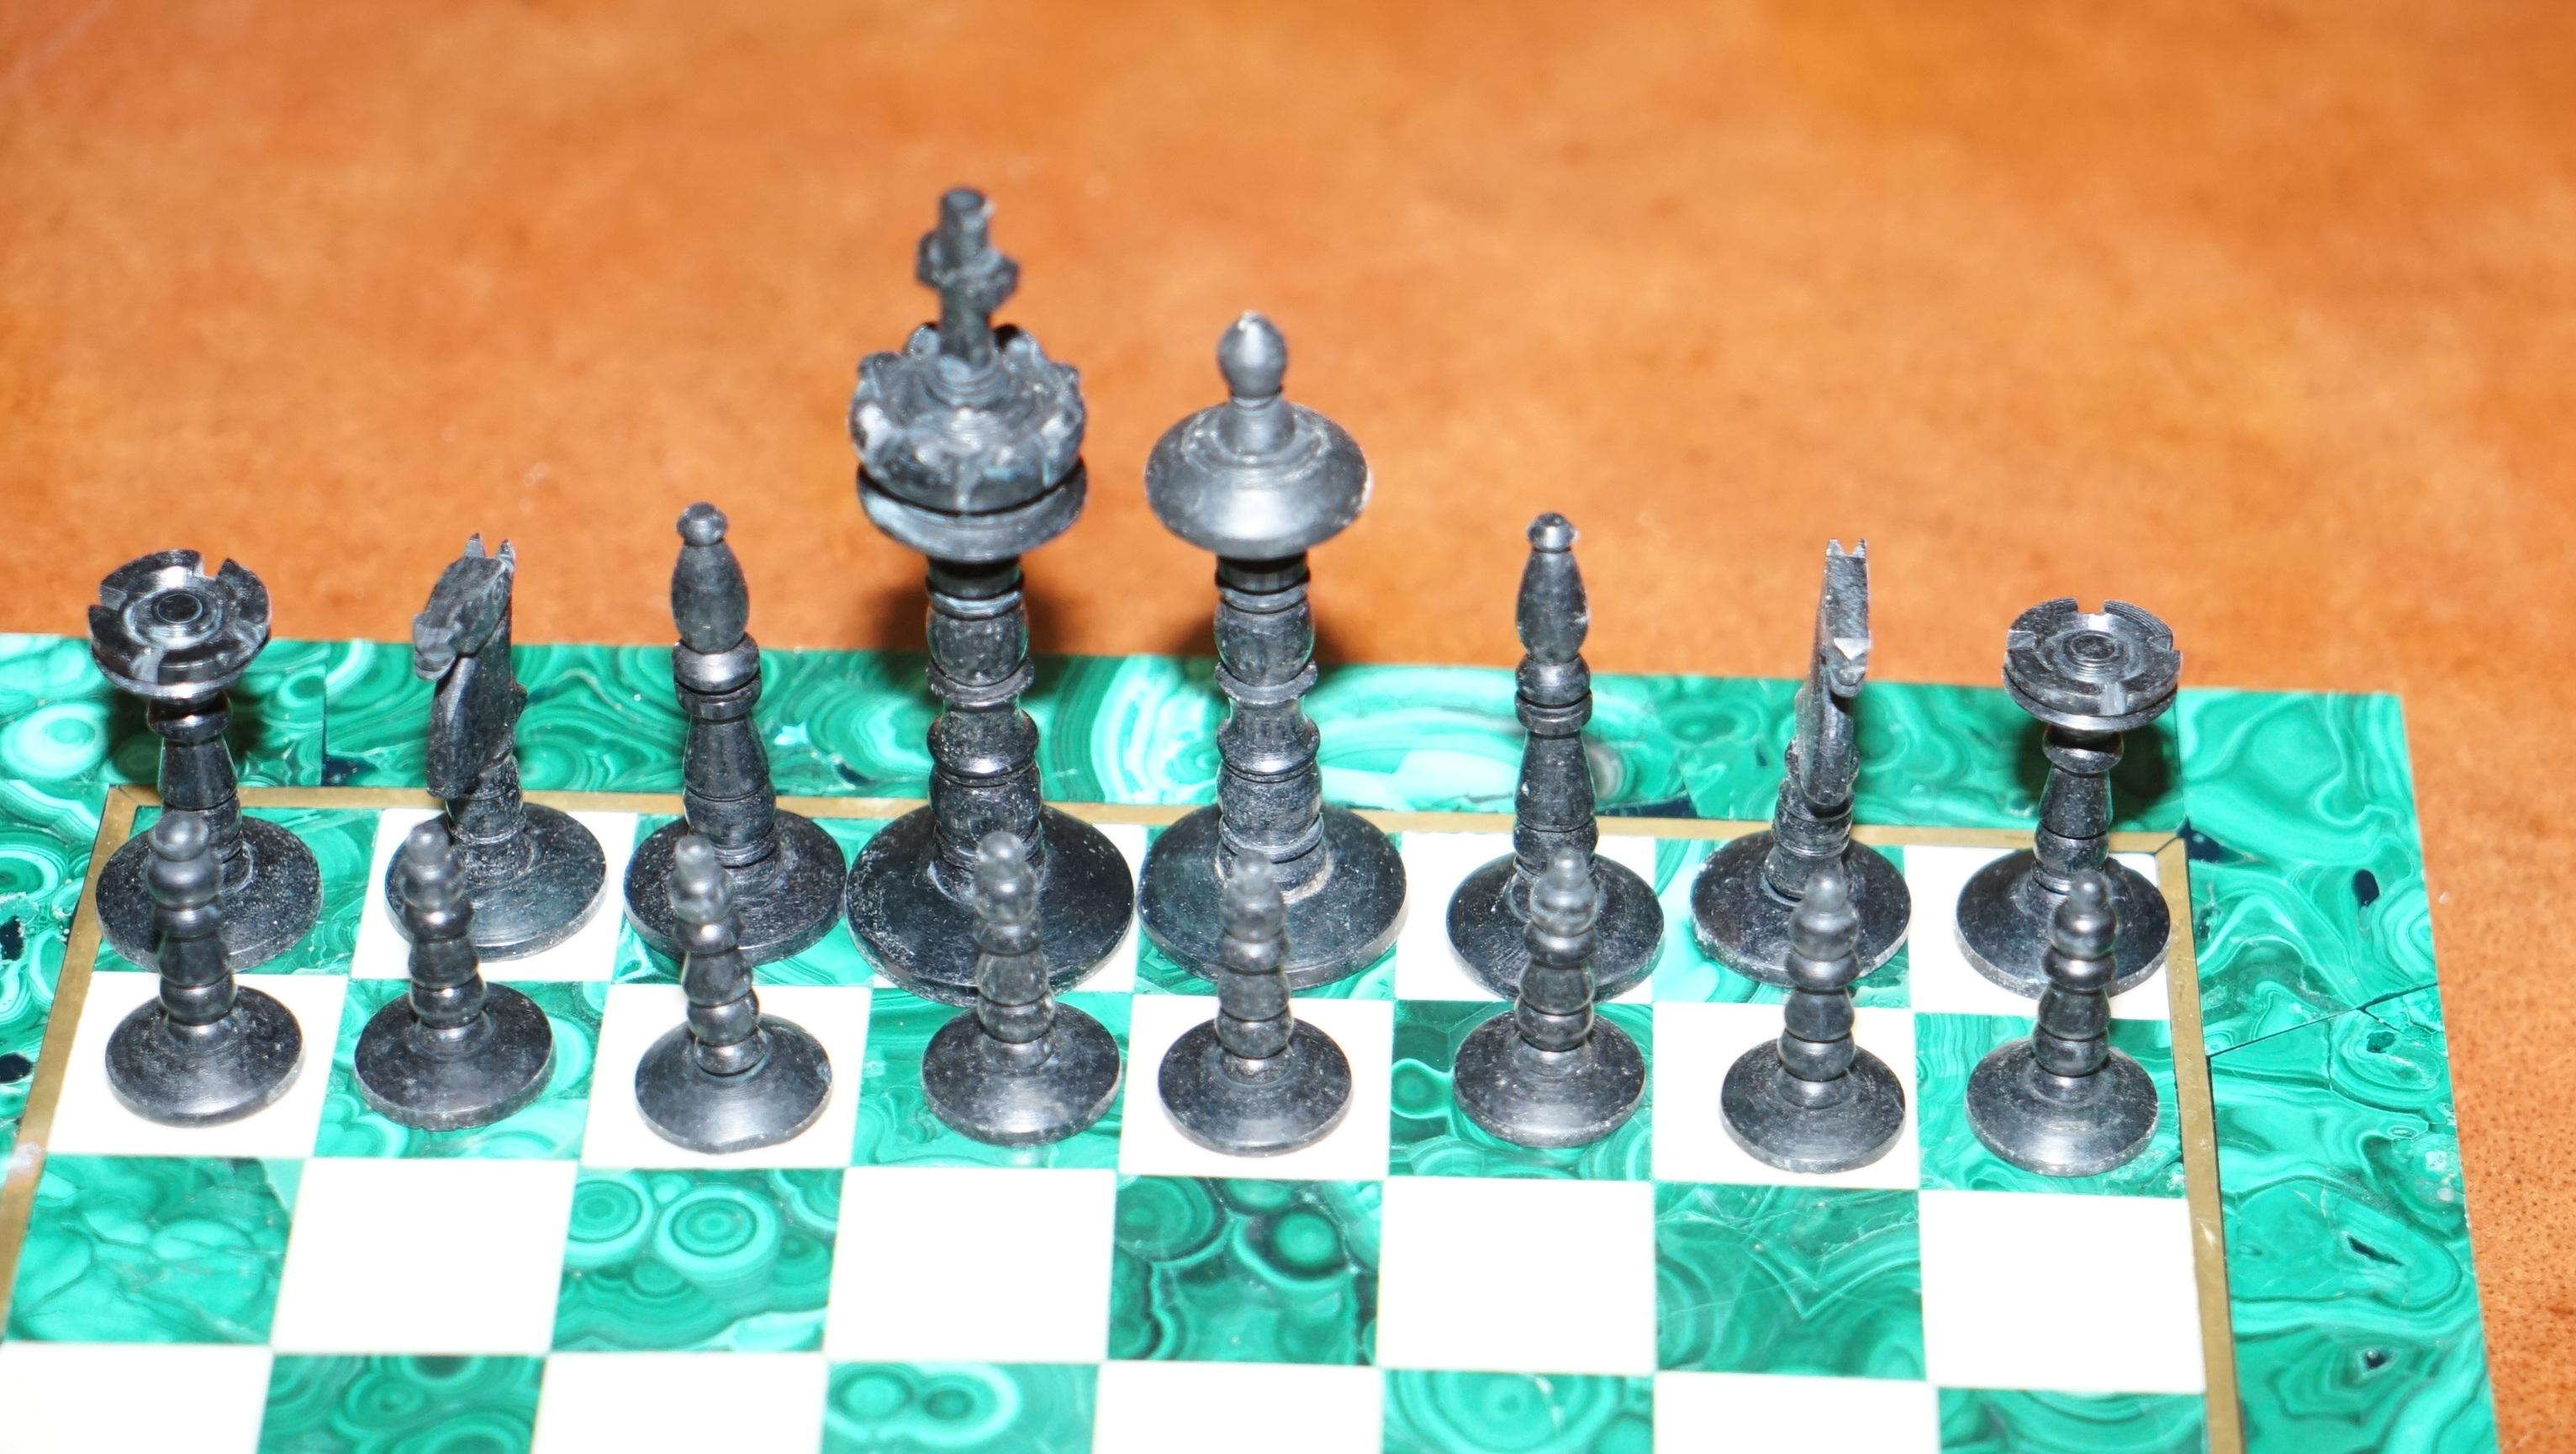 malachite chess set